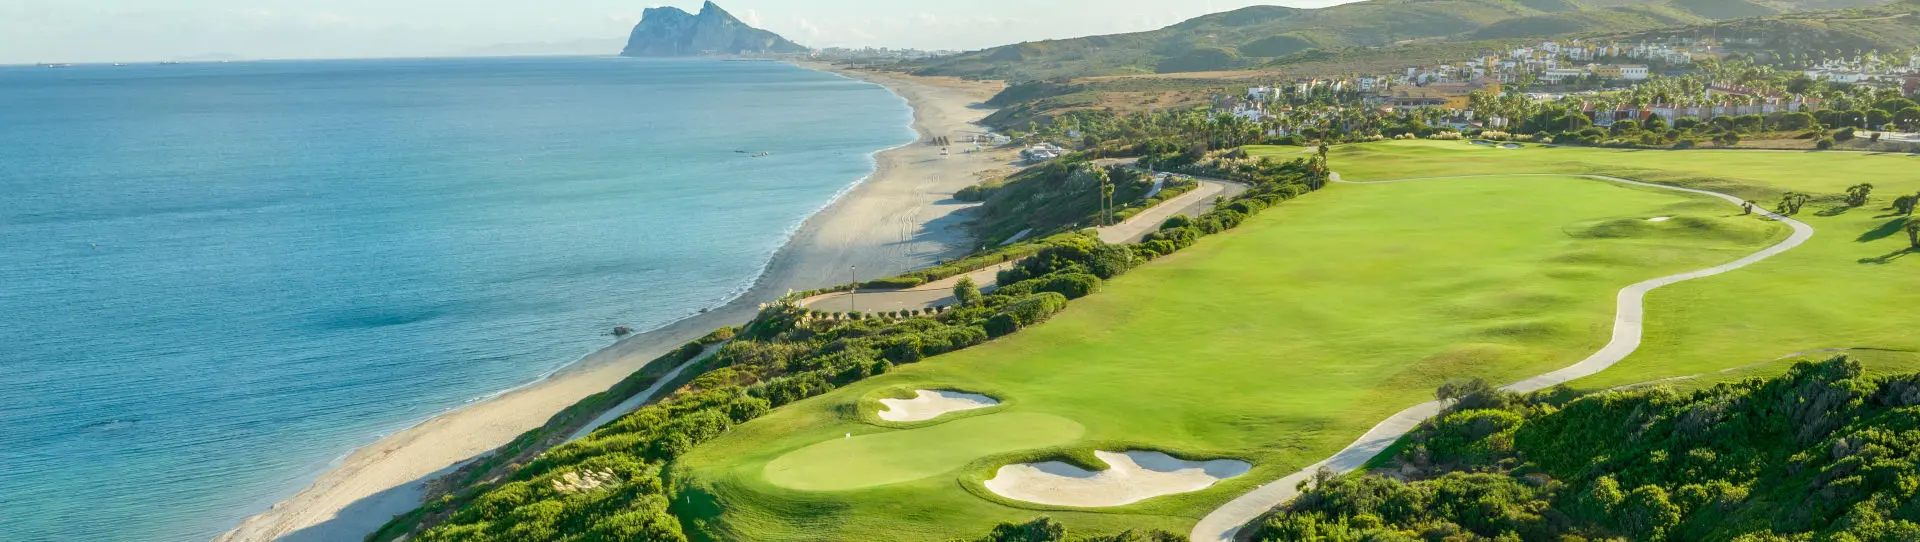 Spain golf holidays - Alcaidesa Golf Combo<br>Buggy Included (minimum 4 players) - Photo 3